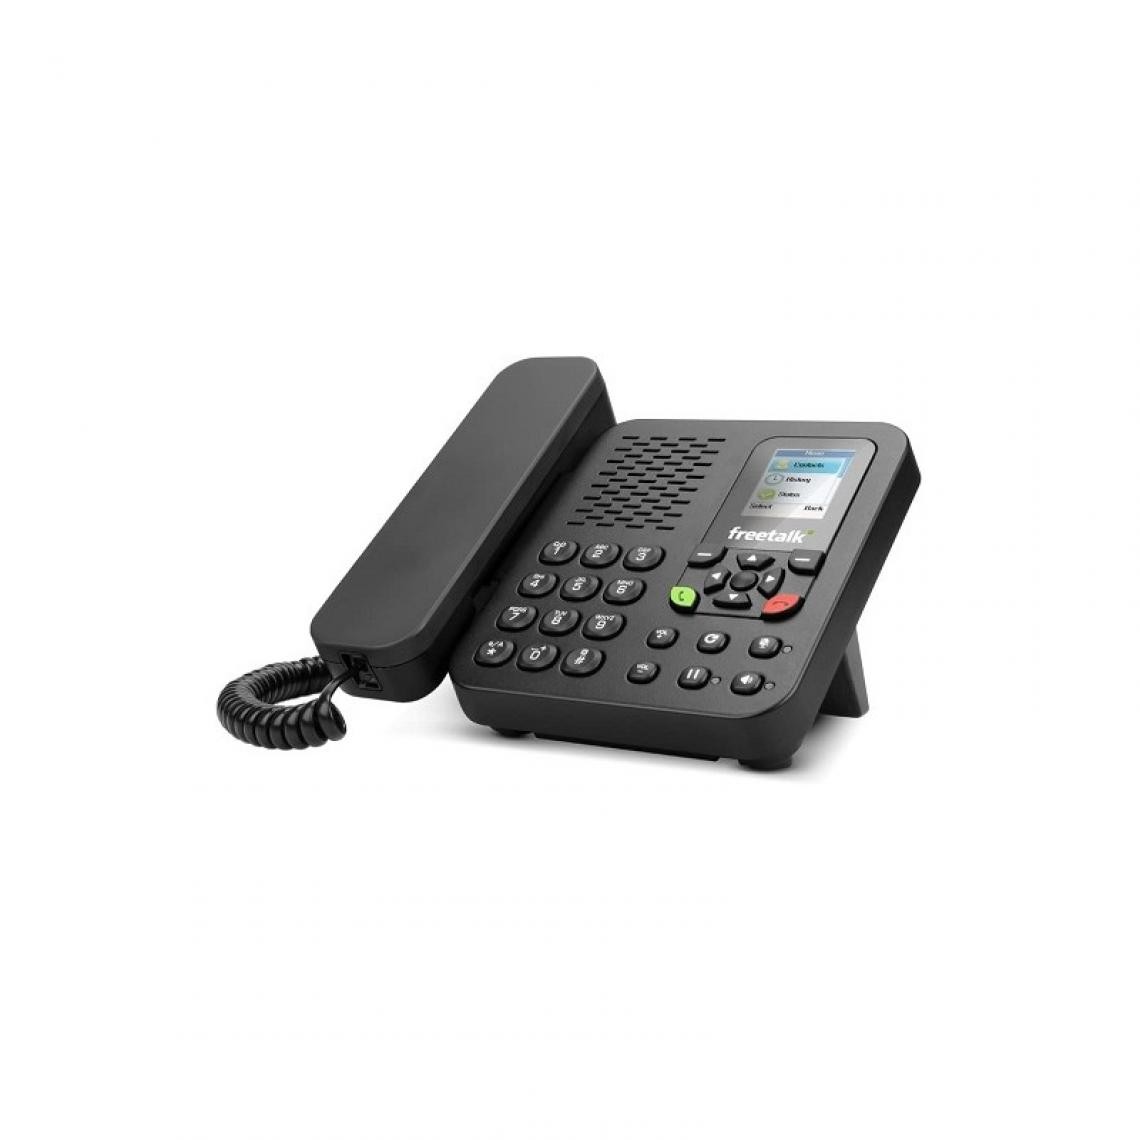 Skype - TELEPHONE FIXE FREETALK-3000 - Téléphone fixe filaire